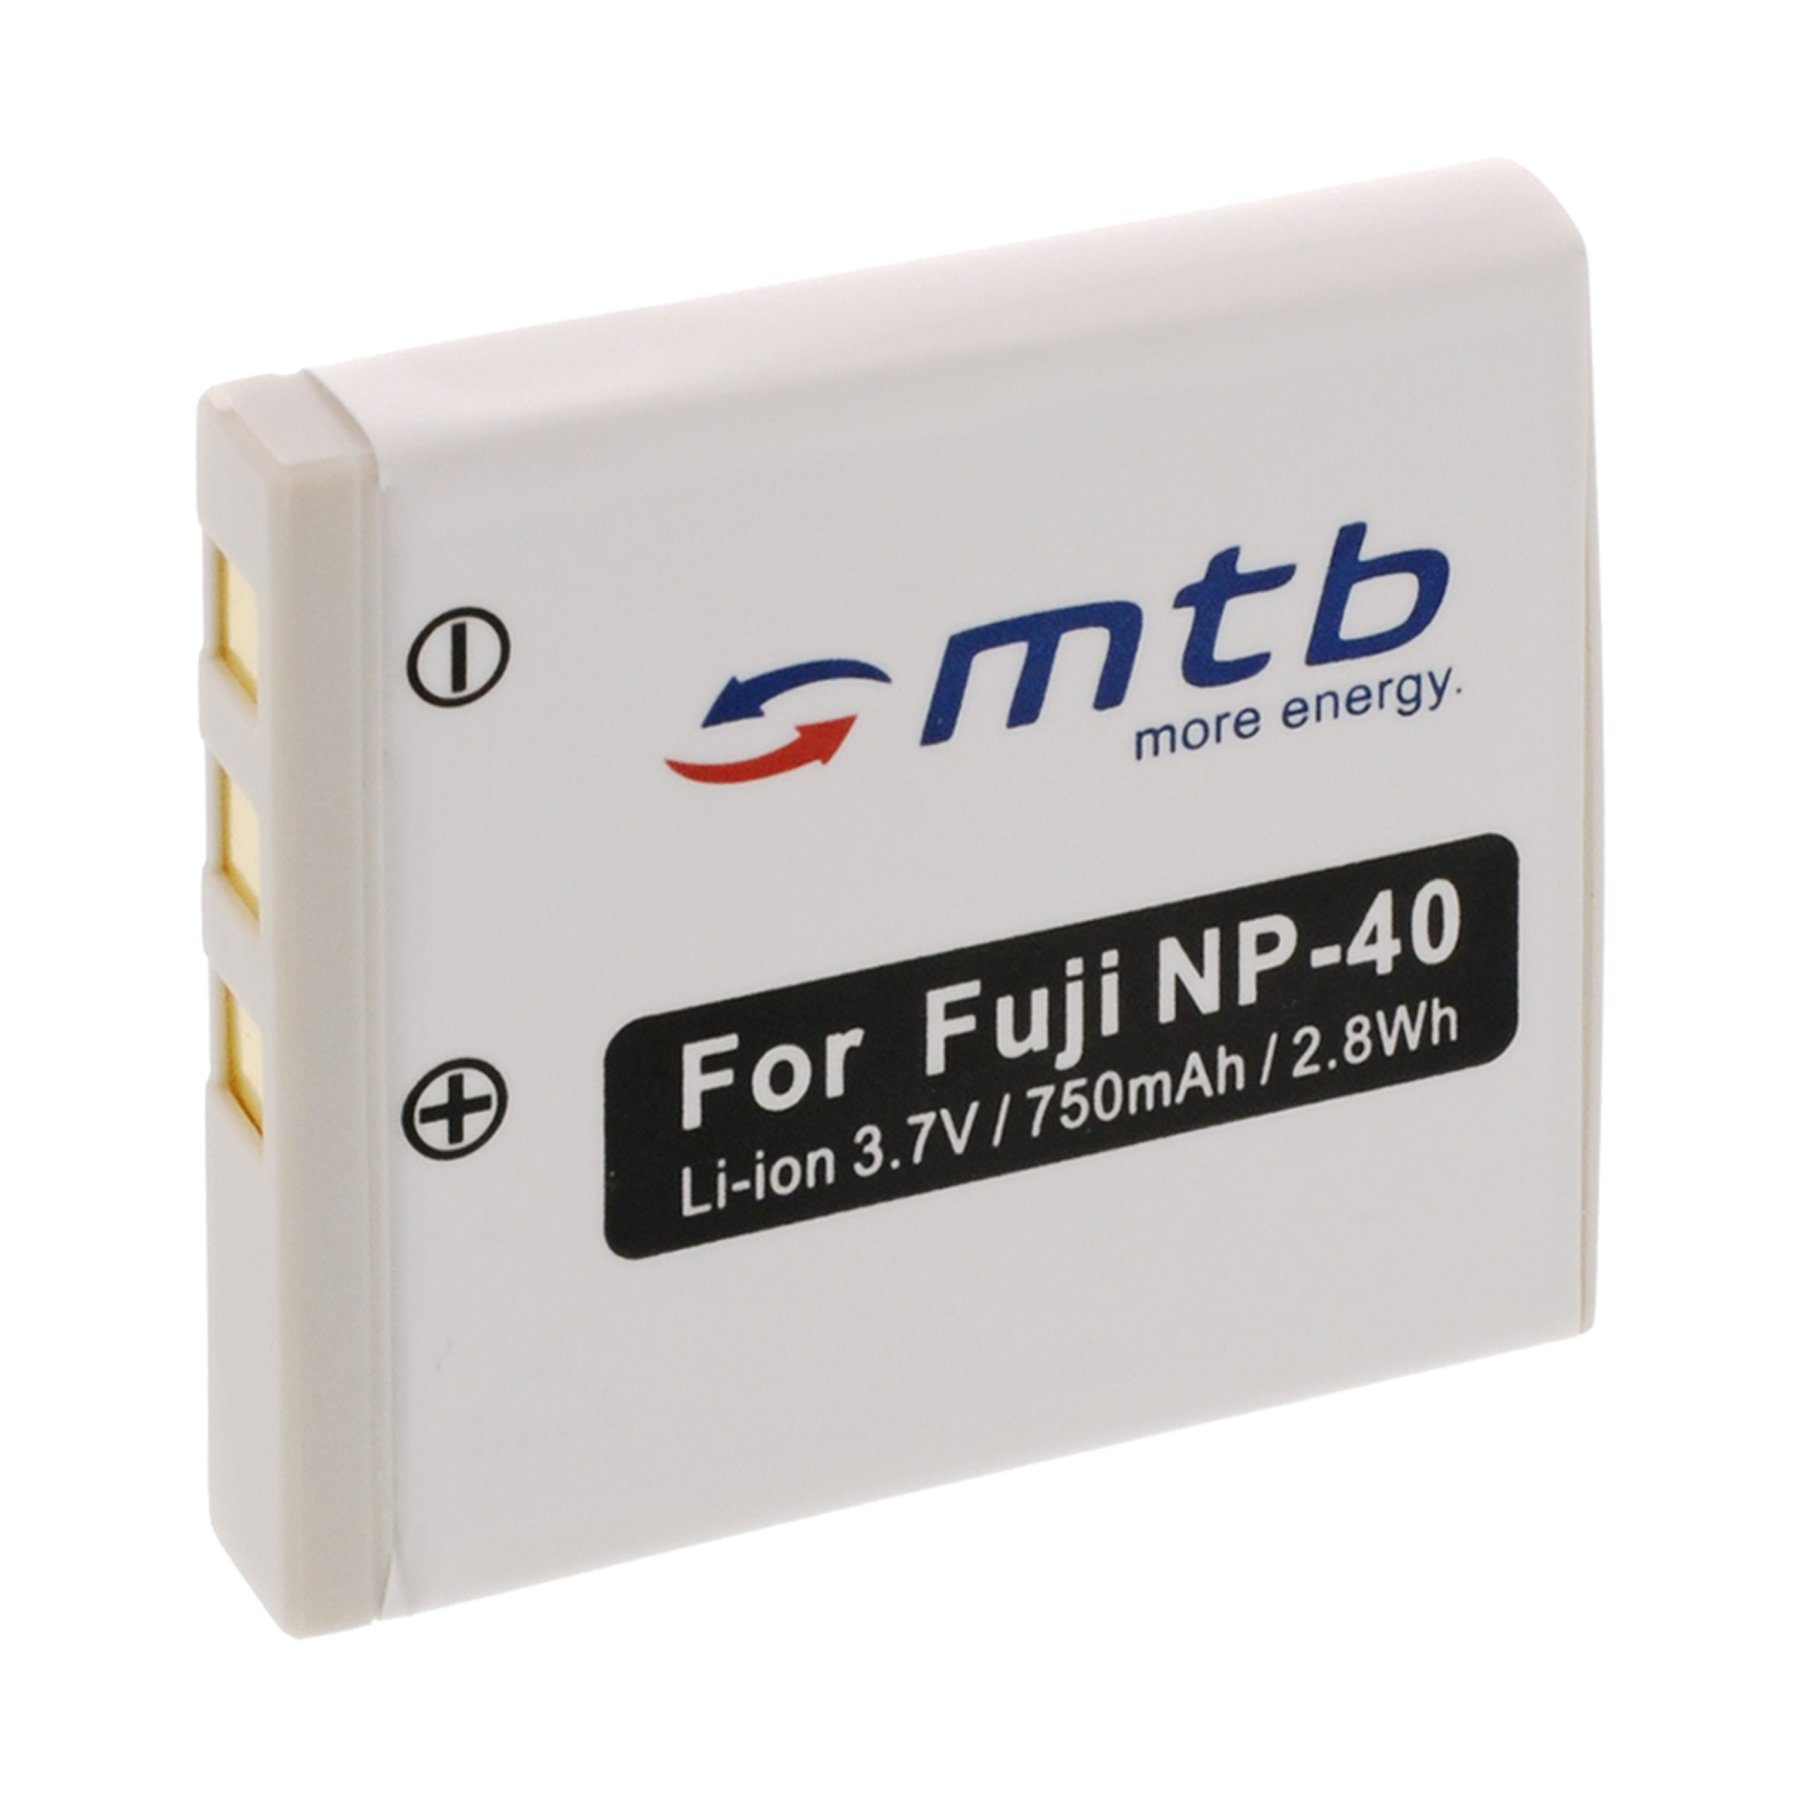 mtb more energy [BAT-021 - Li-Ion] Kamera-Akku kompatibel mit Akku-Typ Fuji NP-40 750 mAh (3,7 V), passend für: Fuji Fujifilm Finepix F402, F455, F460, F470, F480, F485, F610, F650, F700, F710, F810, J50, V10, Z1, Z2, Z3, Z5fd // // Creative Vado Pocket Video Cam // // Easypix DVC5308 HD, S530, SDV 1200, TS530, VX600, …